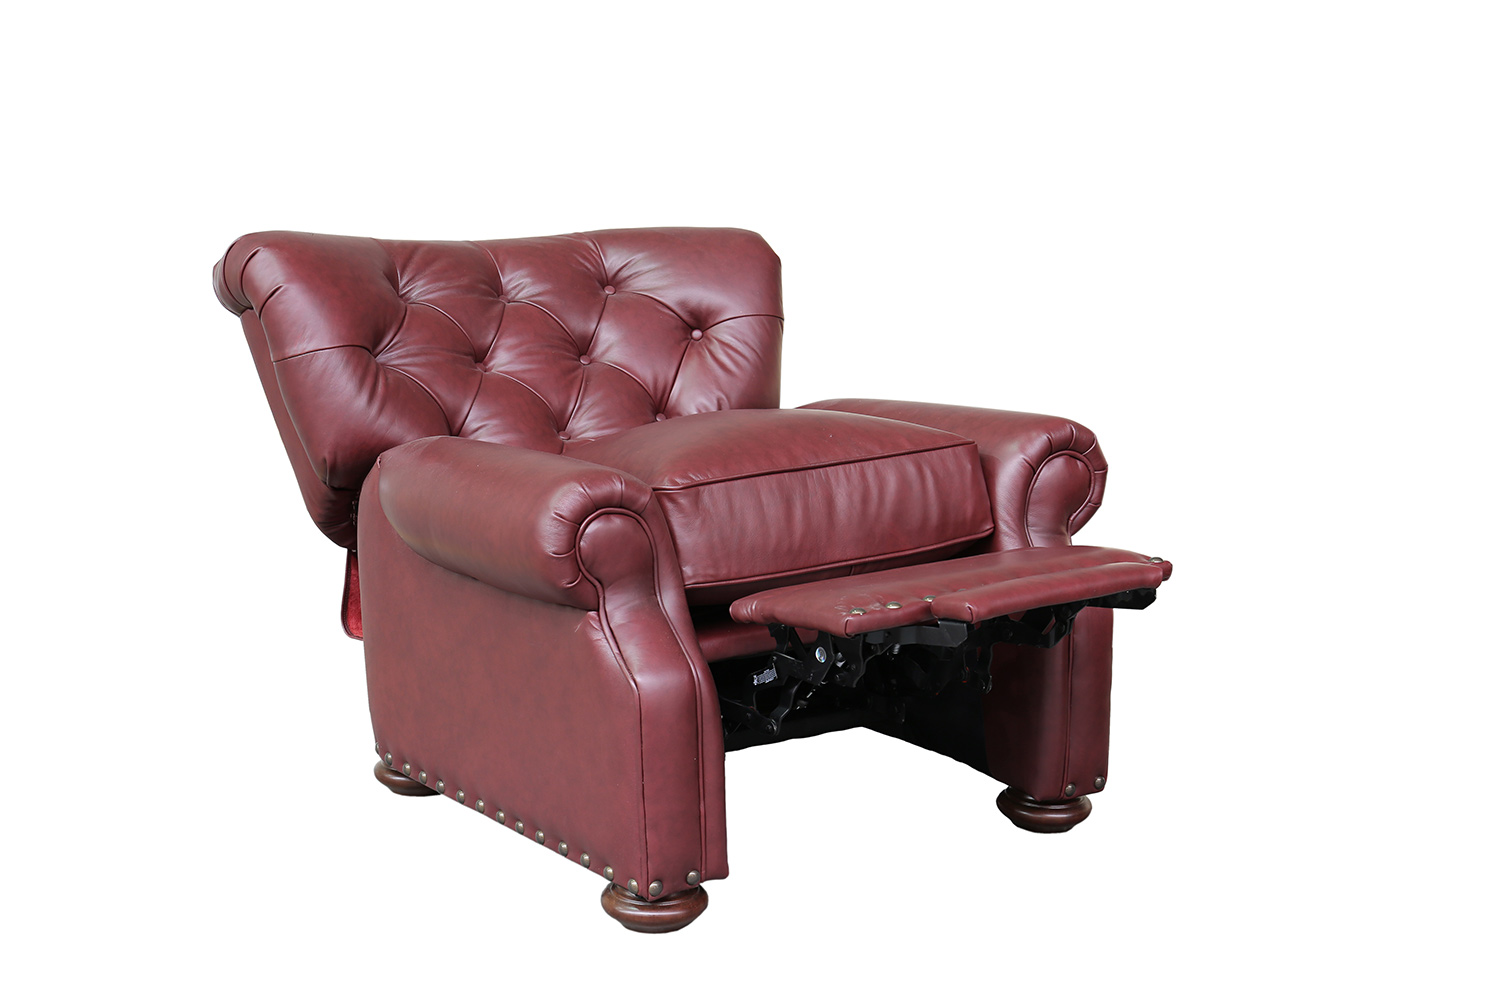 Barcalounger Sinclair Recliner Chair - Shoreham Wine/All Leather